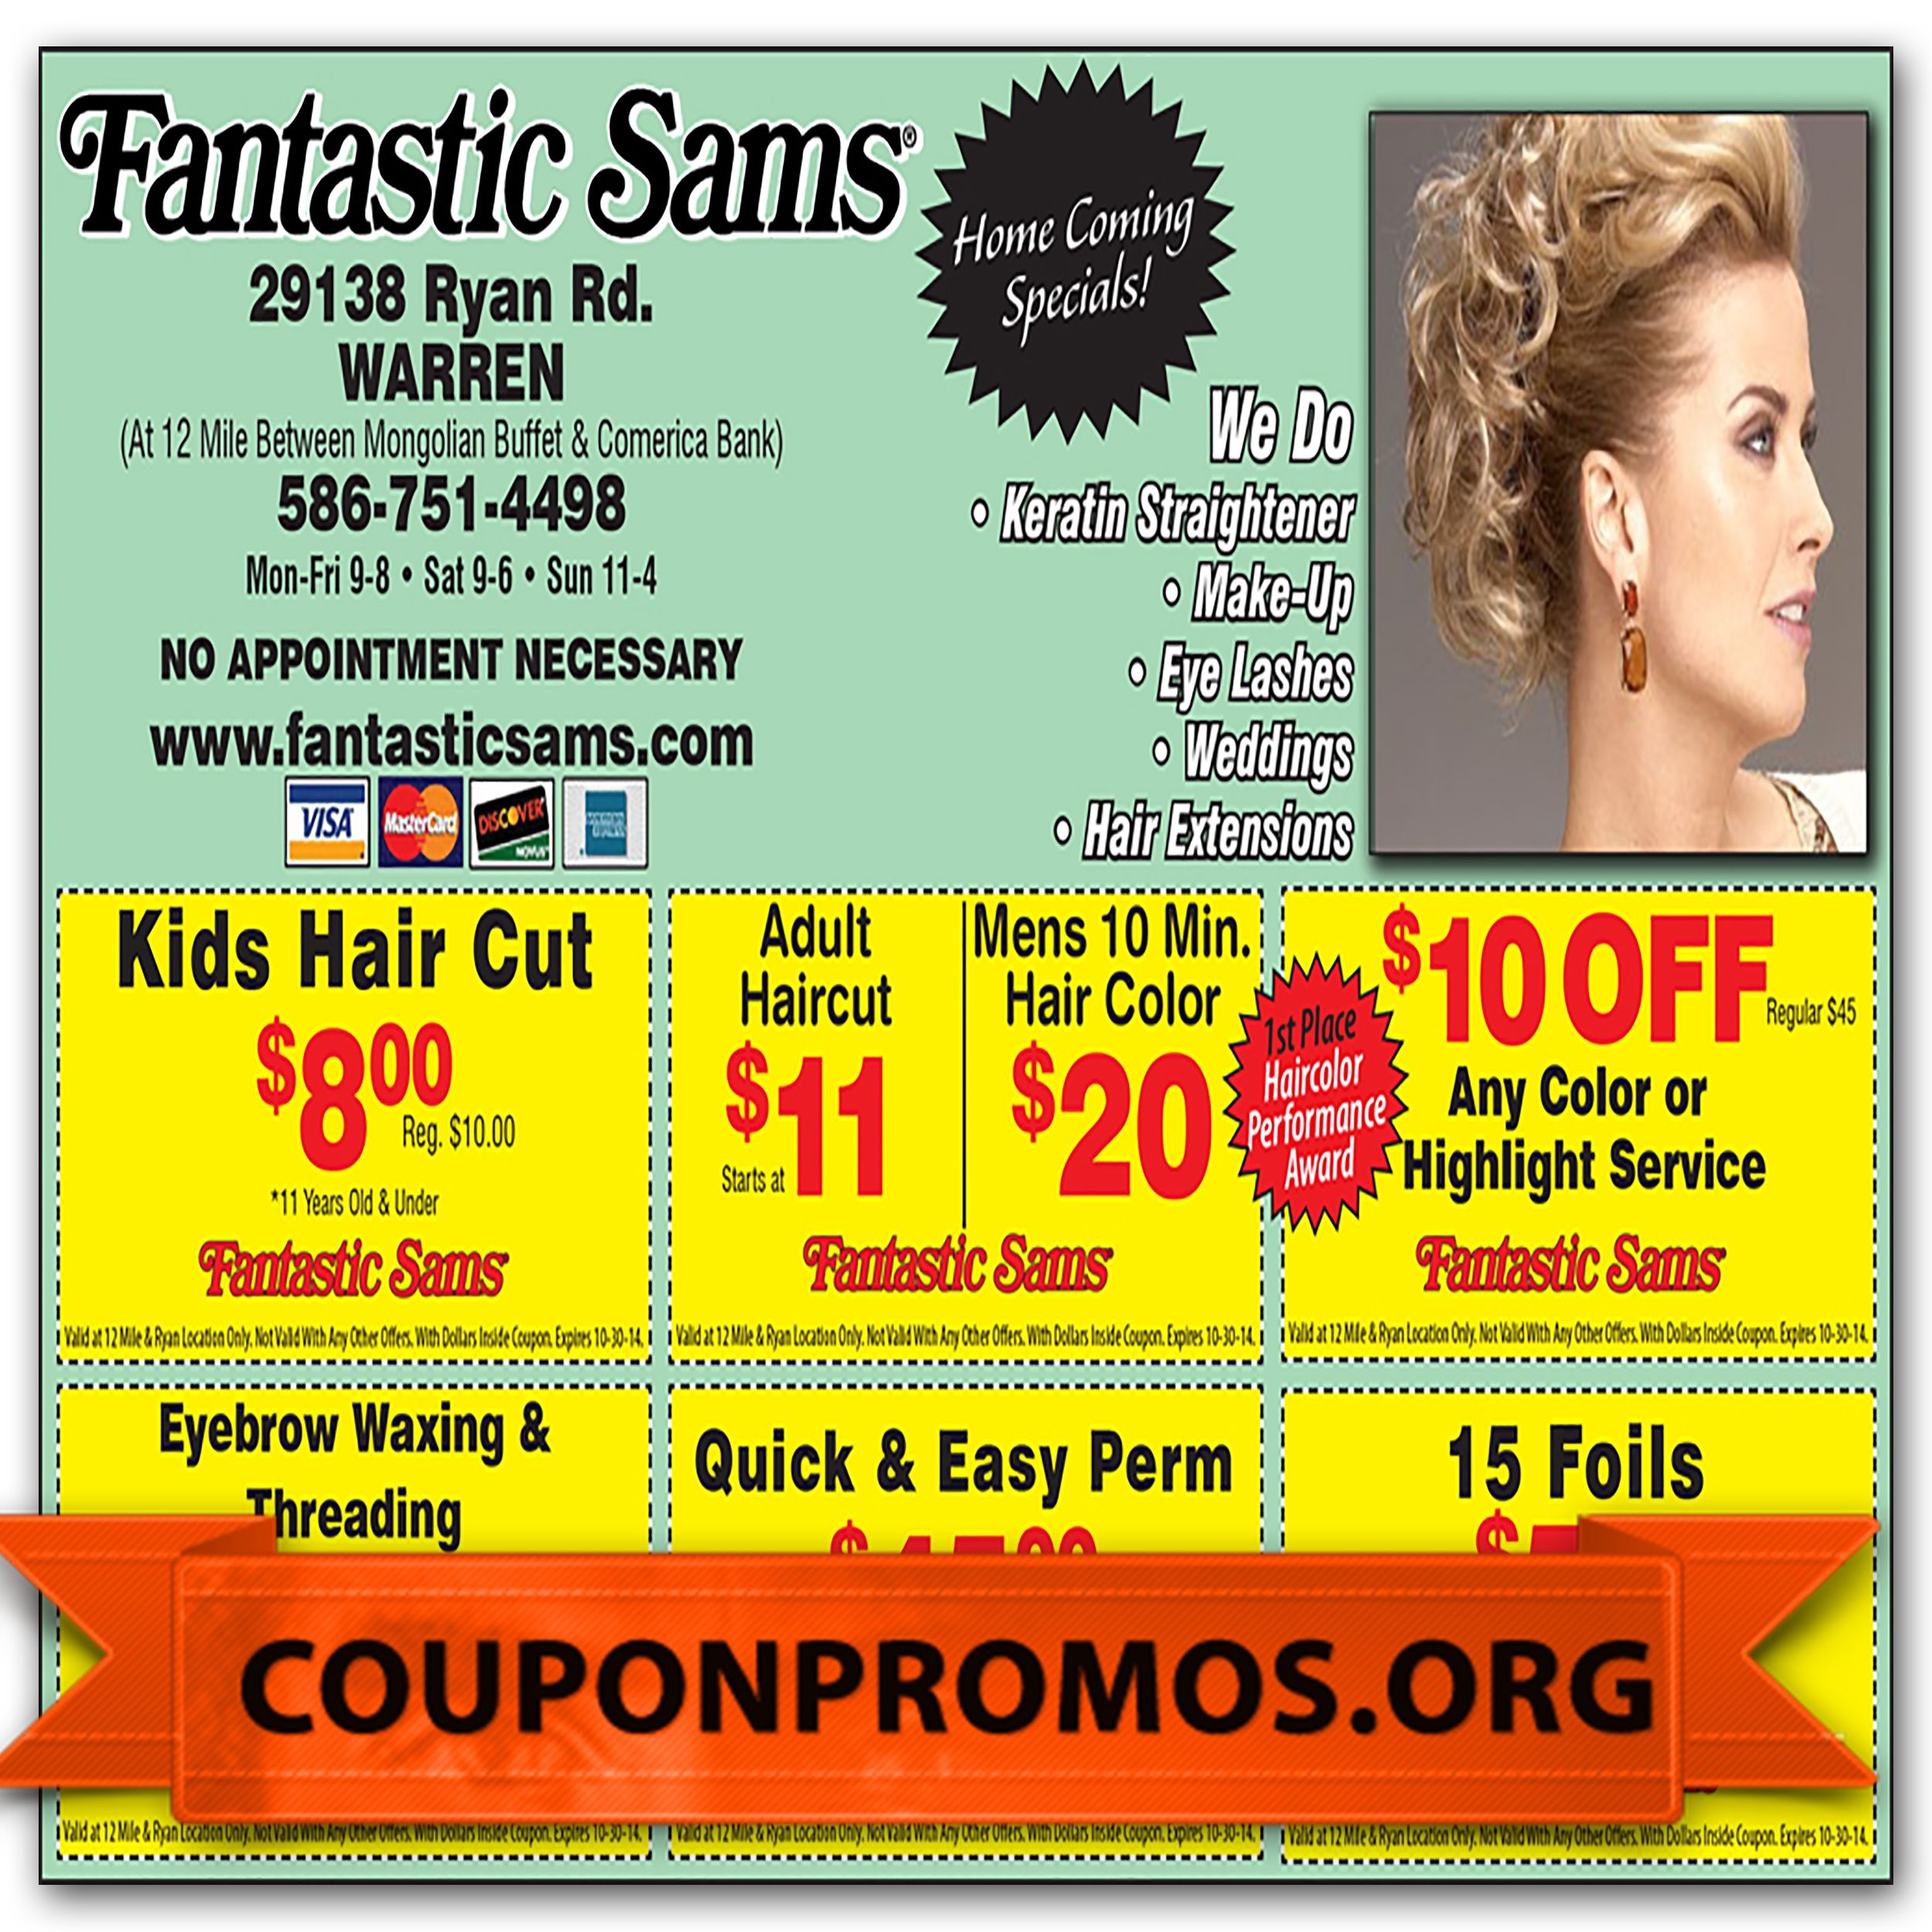 Free Fantastic Sams Discount Coupons Printable For November December - Free Printable Coupons For Fantastic Sams